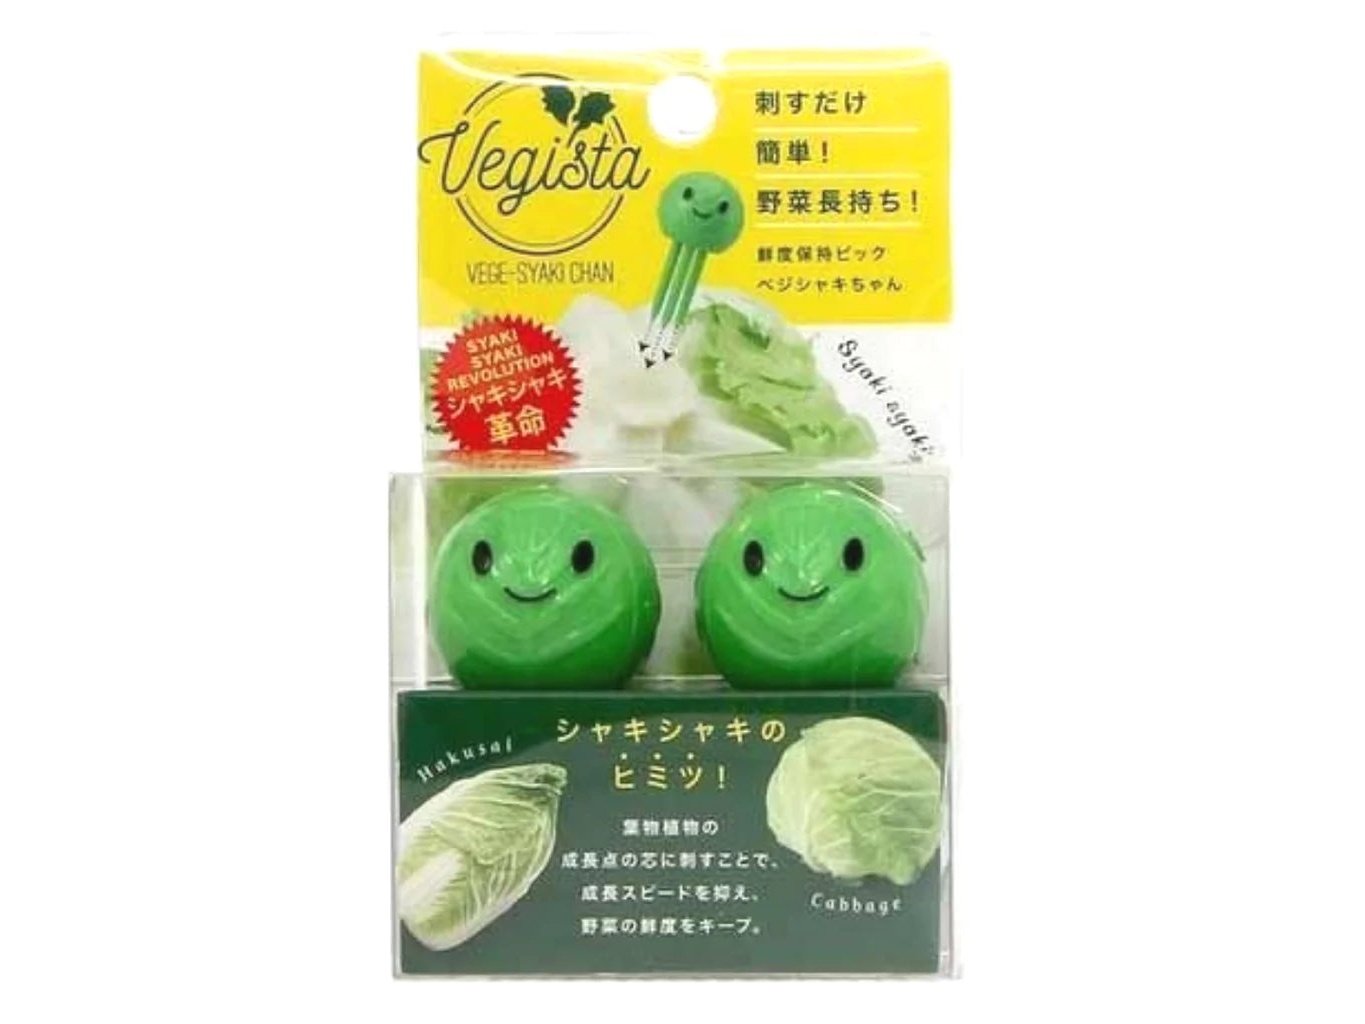 Vegista Vege-Sako Chan Vegetable Keeper 2pcs